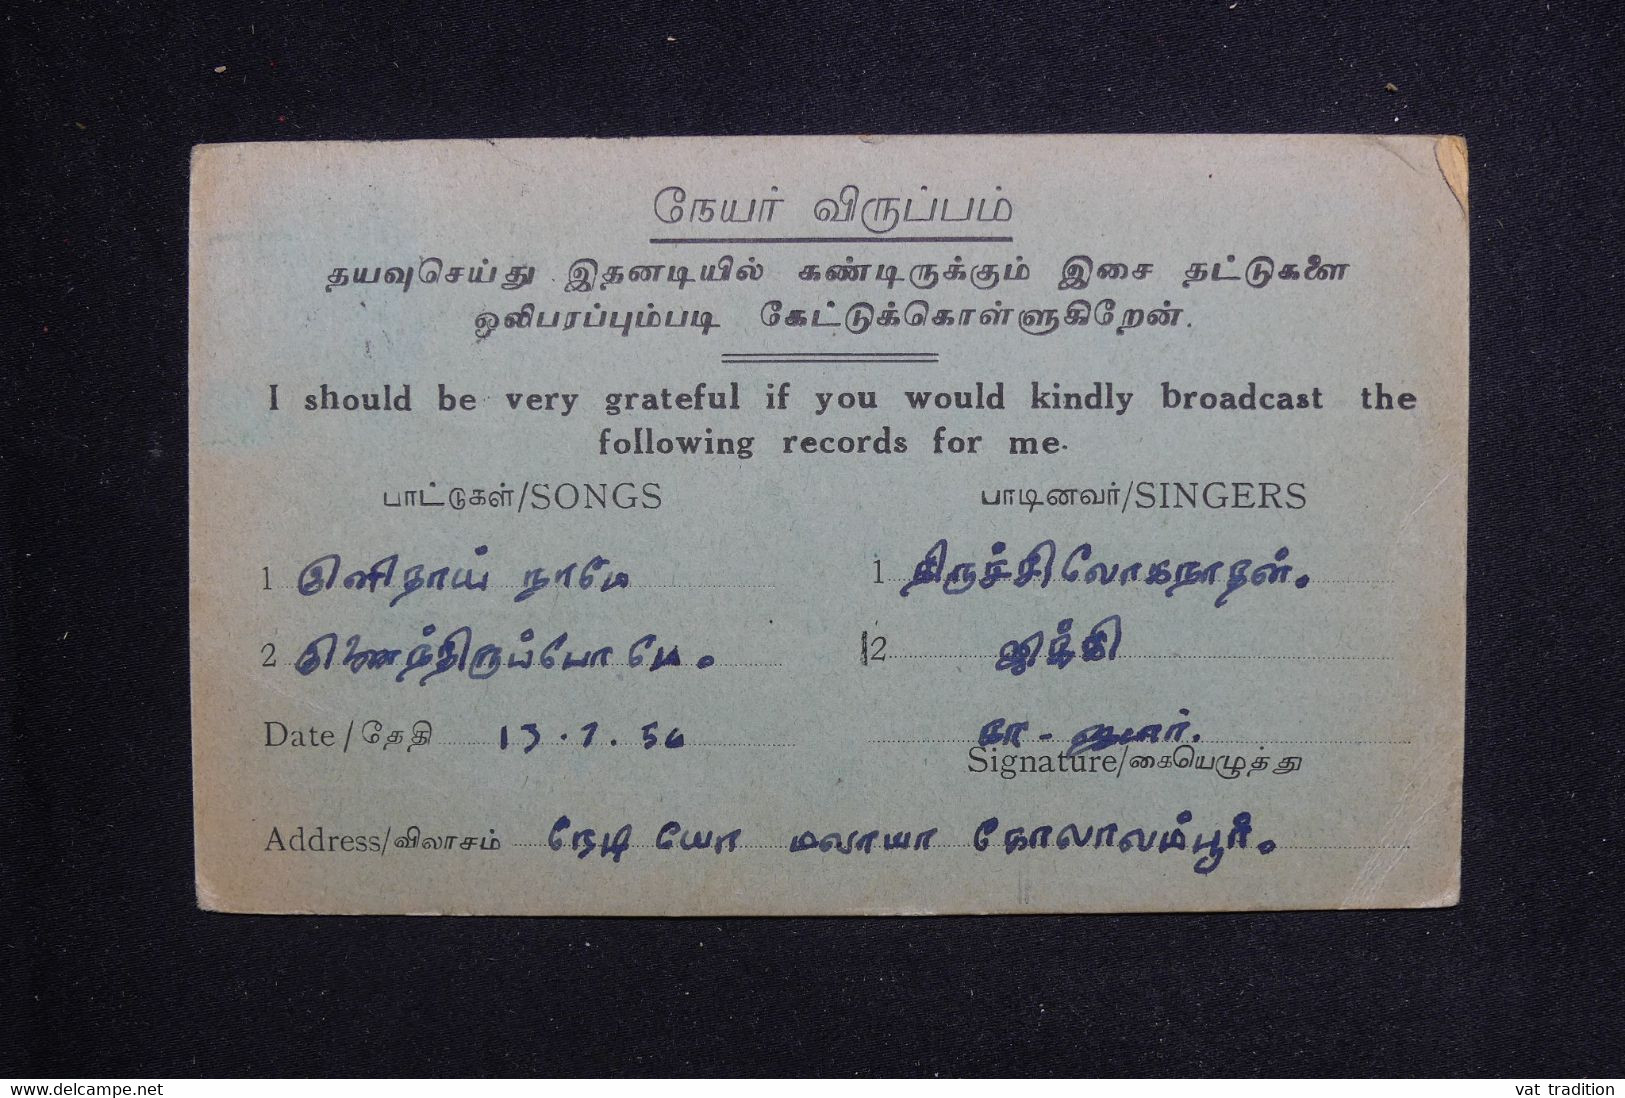 MALAISIE - Carte Pour Radio Malaya  En 1956 - L 124529 - Federation Of Malaya